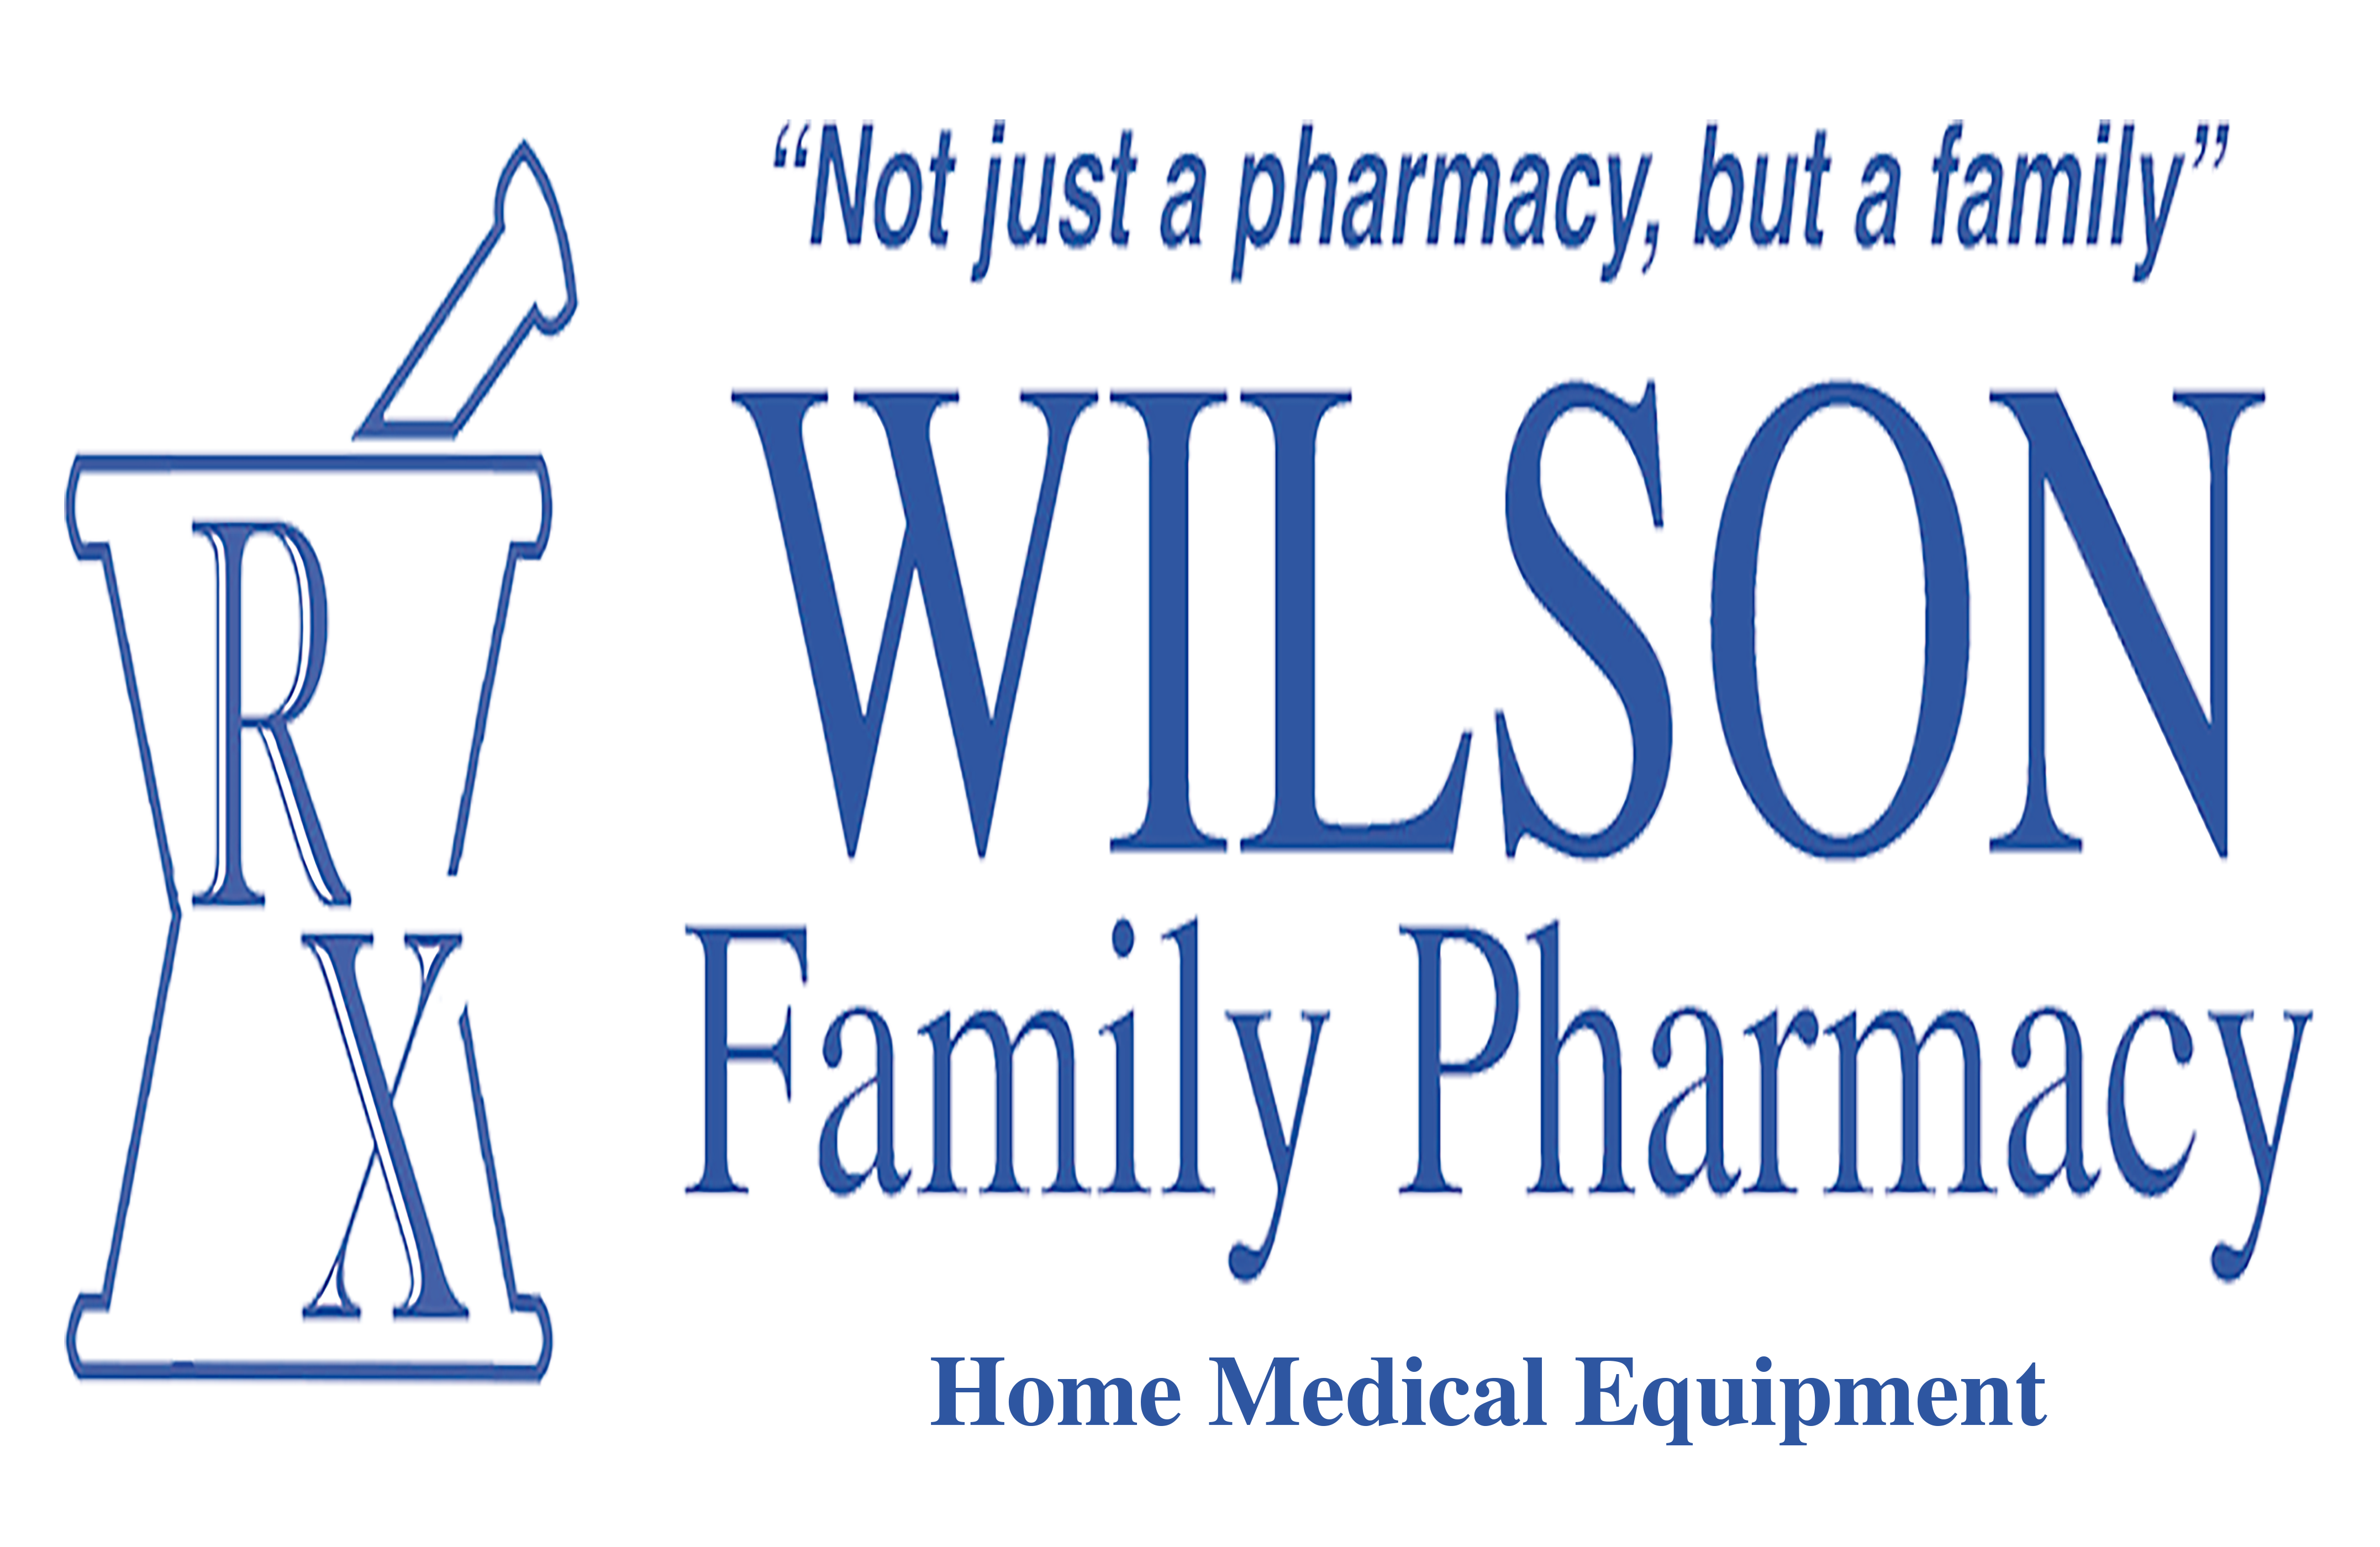 Wilson Family Pharmacy